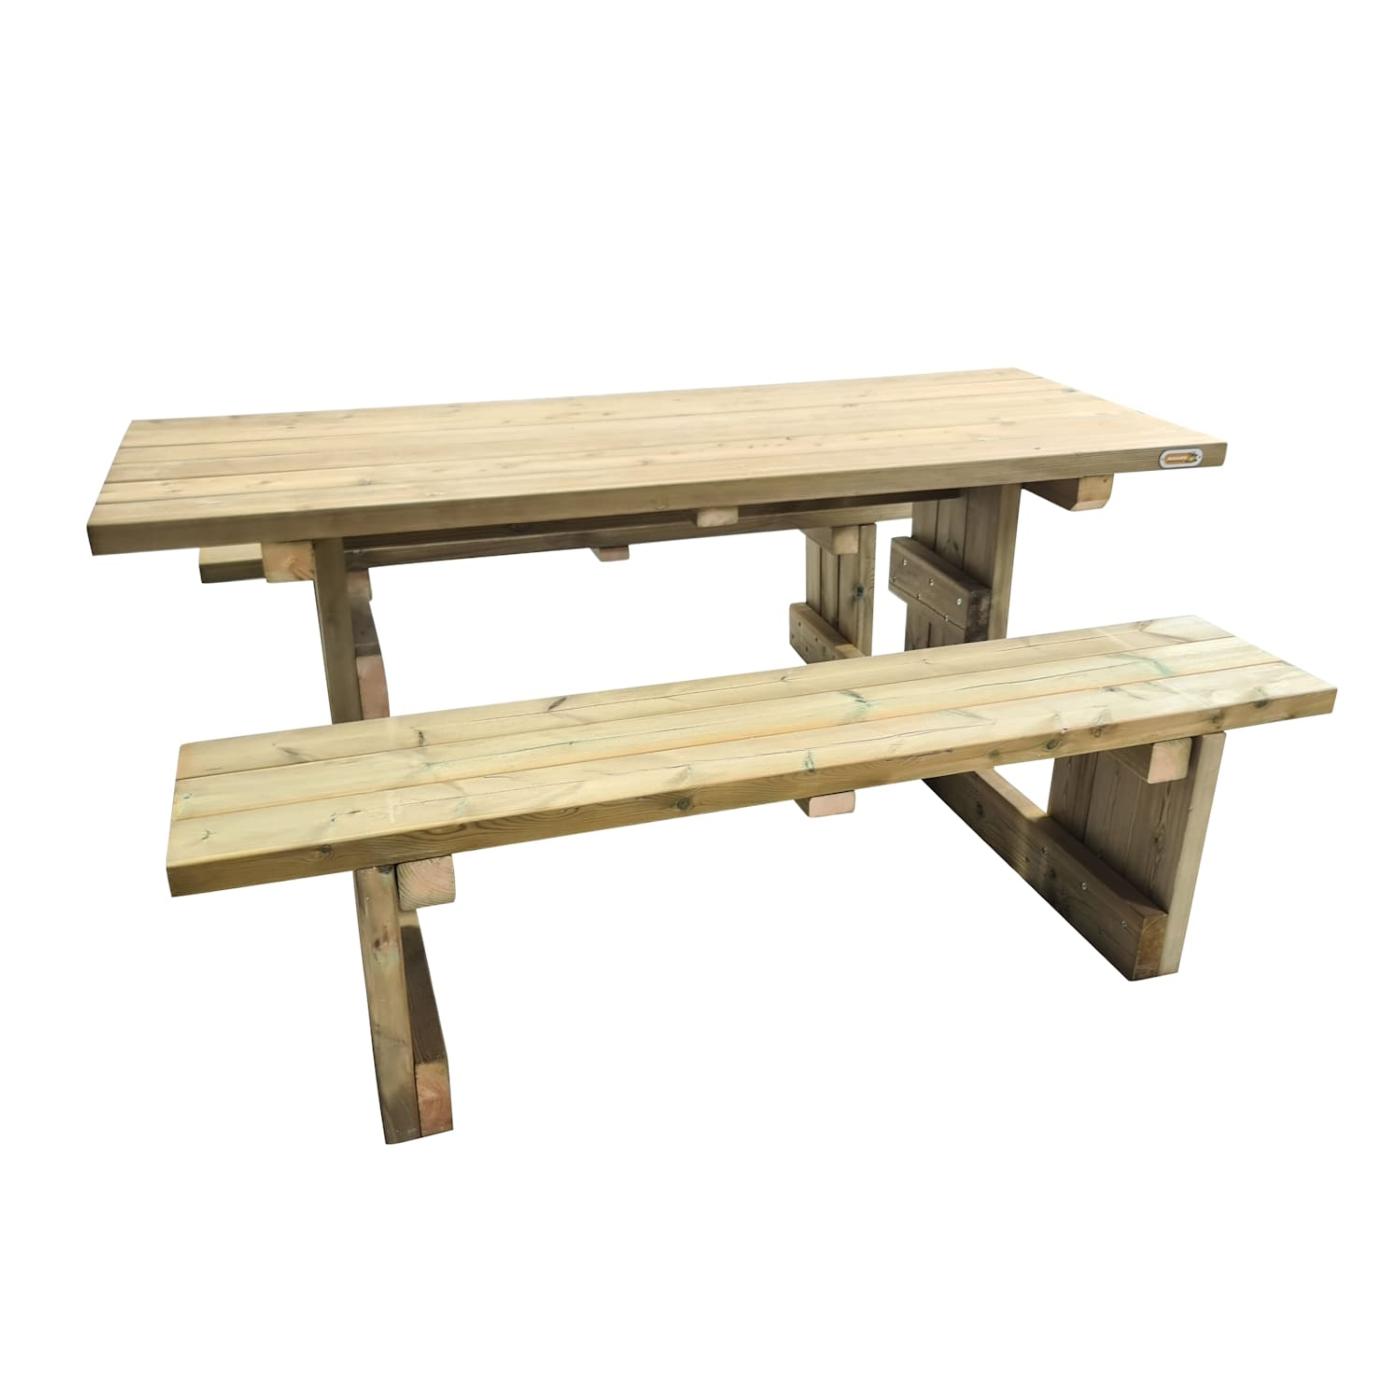 Mesa de picnic cuadrada de madera MASGAMES CANET. Para exterior. Capacidad de 8 personas